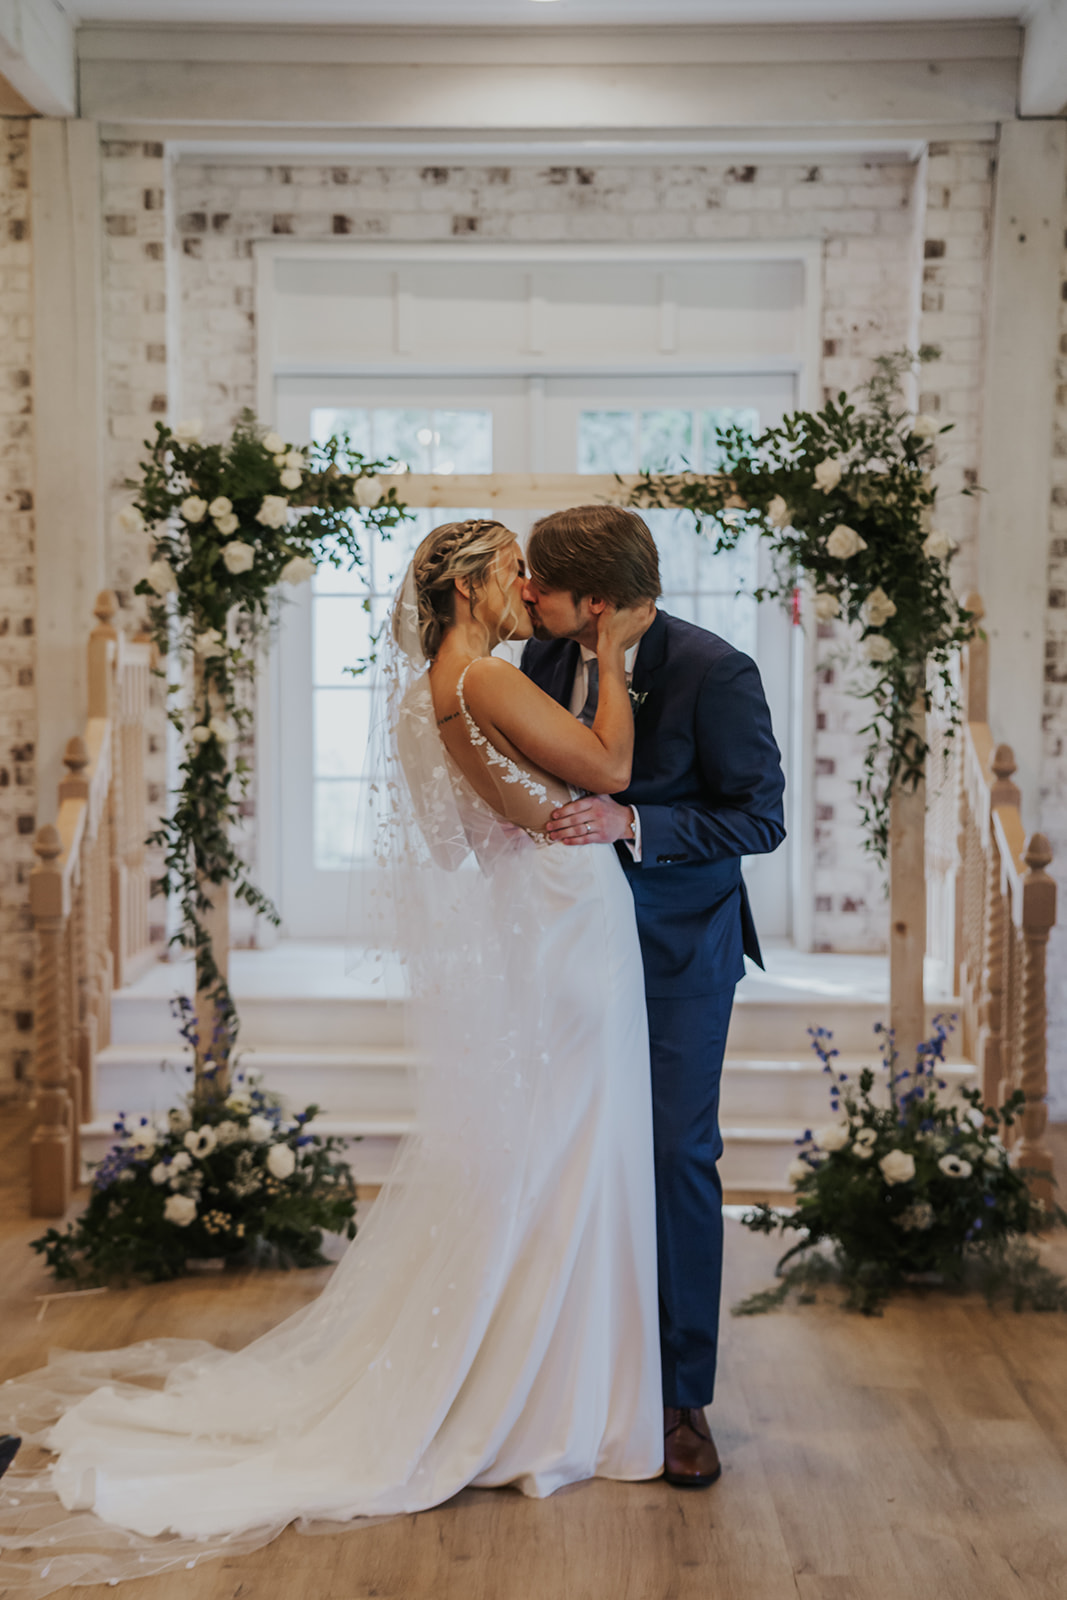 Stunning bride and groom share a kiss inside their Georgia wedding venue